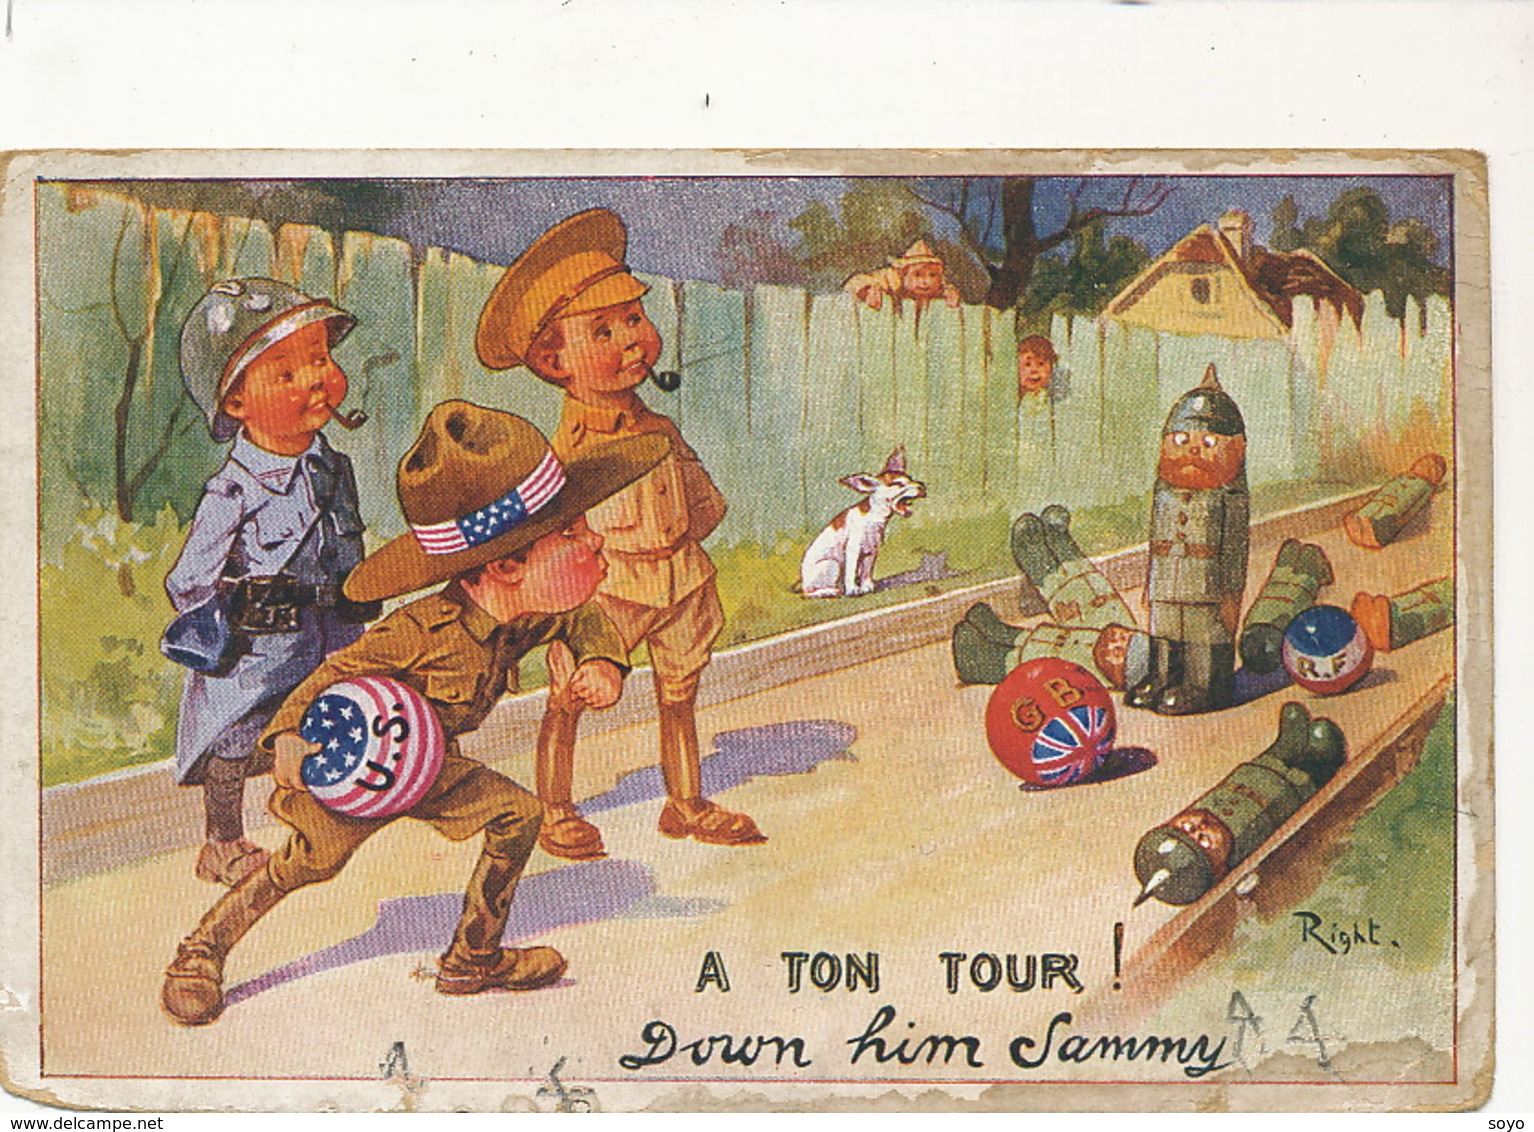 Bowling Comique Quille Guerre 1914  Signée Right Anti Kaiser  US Forces  Edit Lapina  Some Damages - Bowling